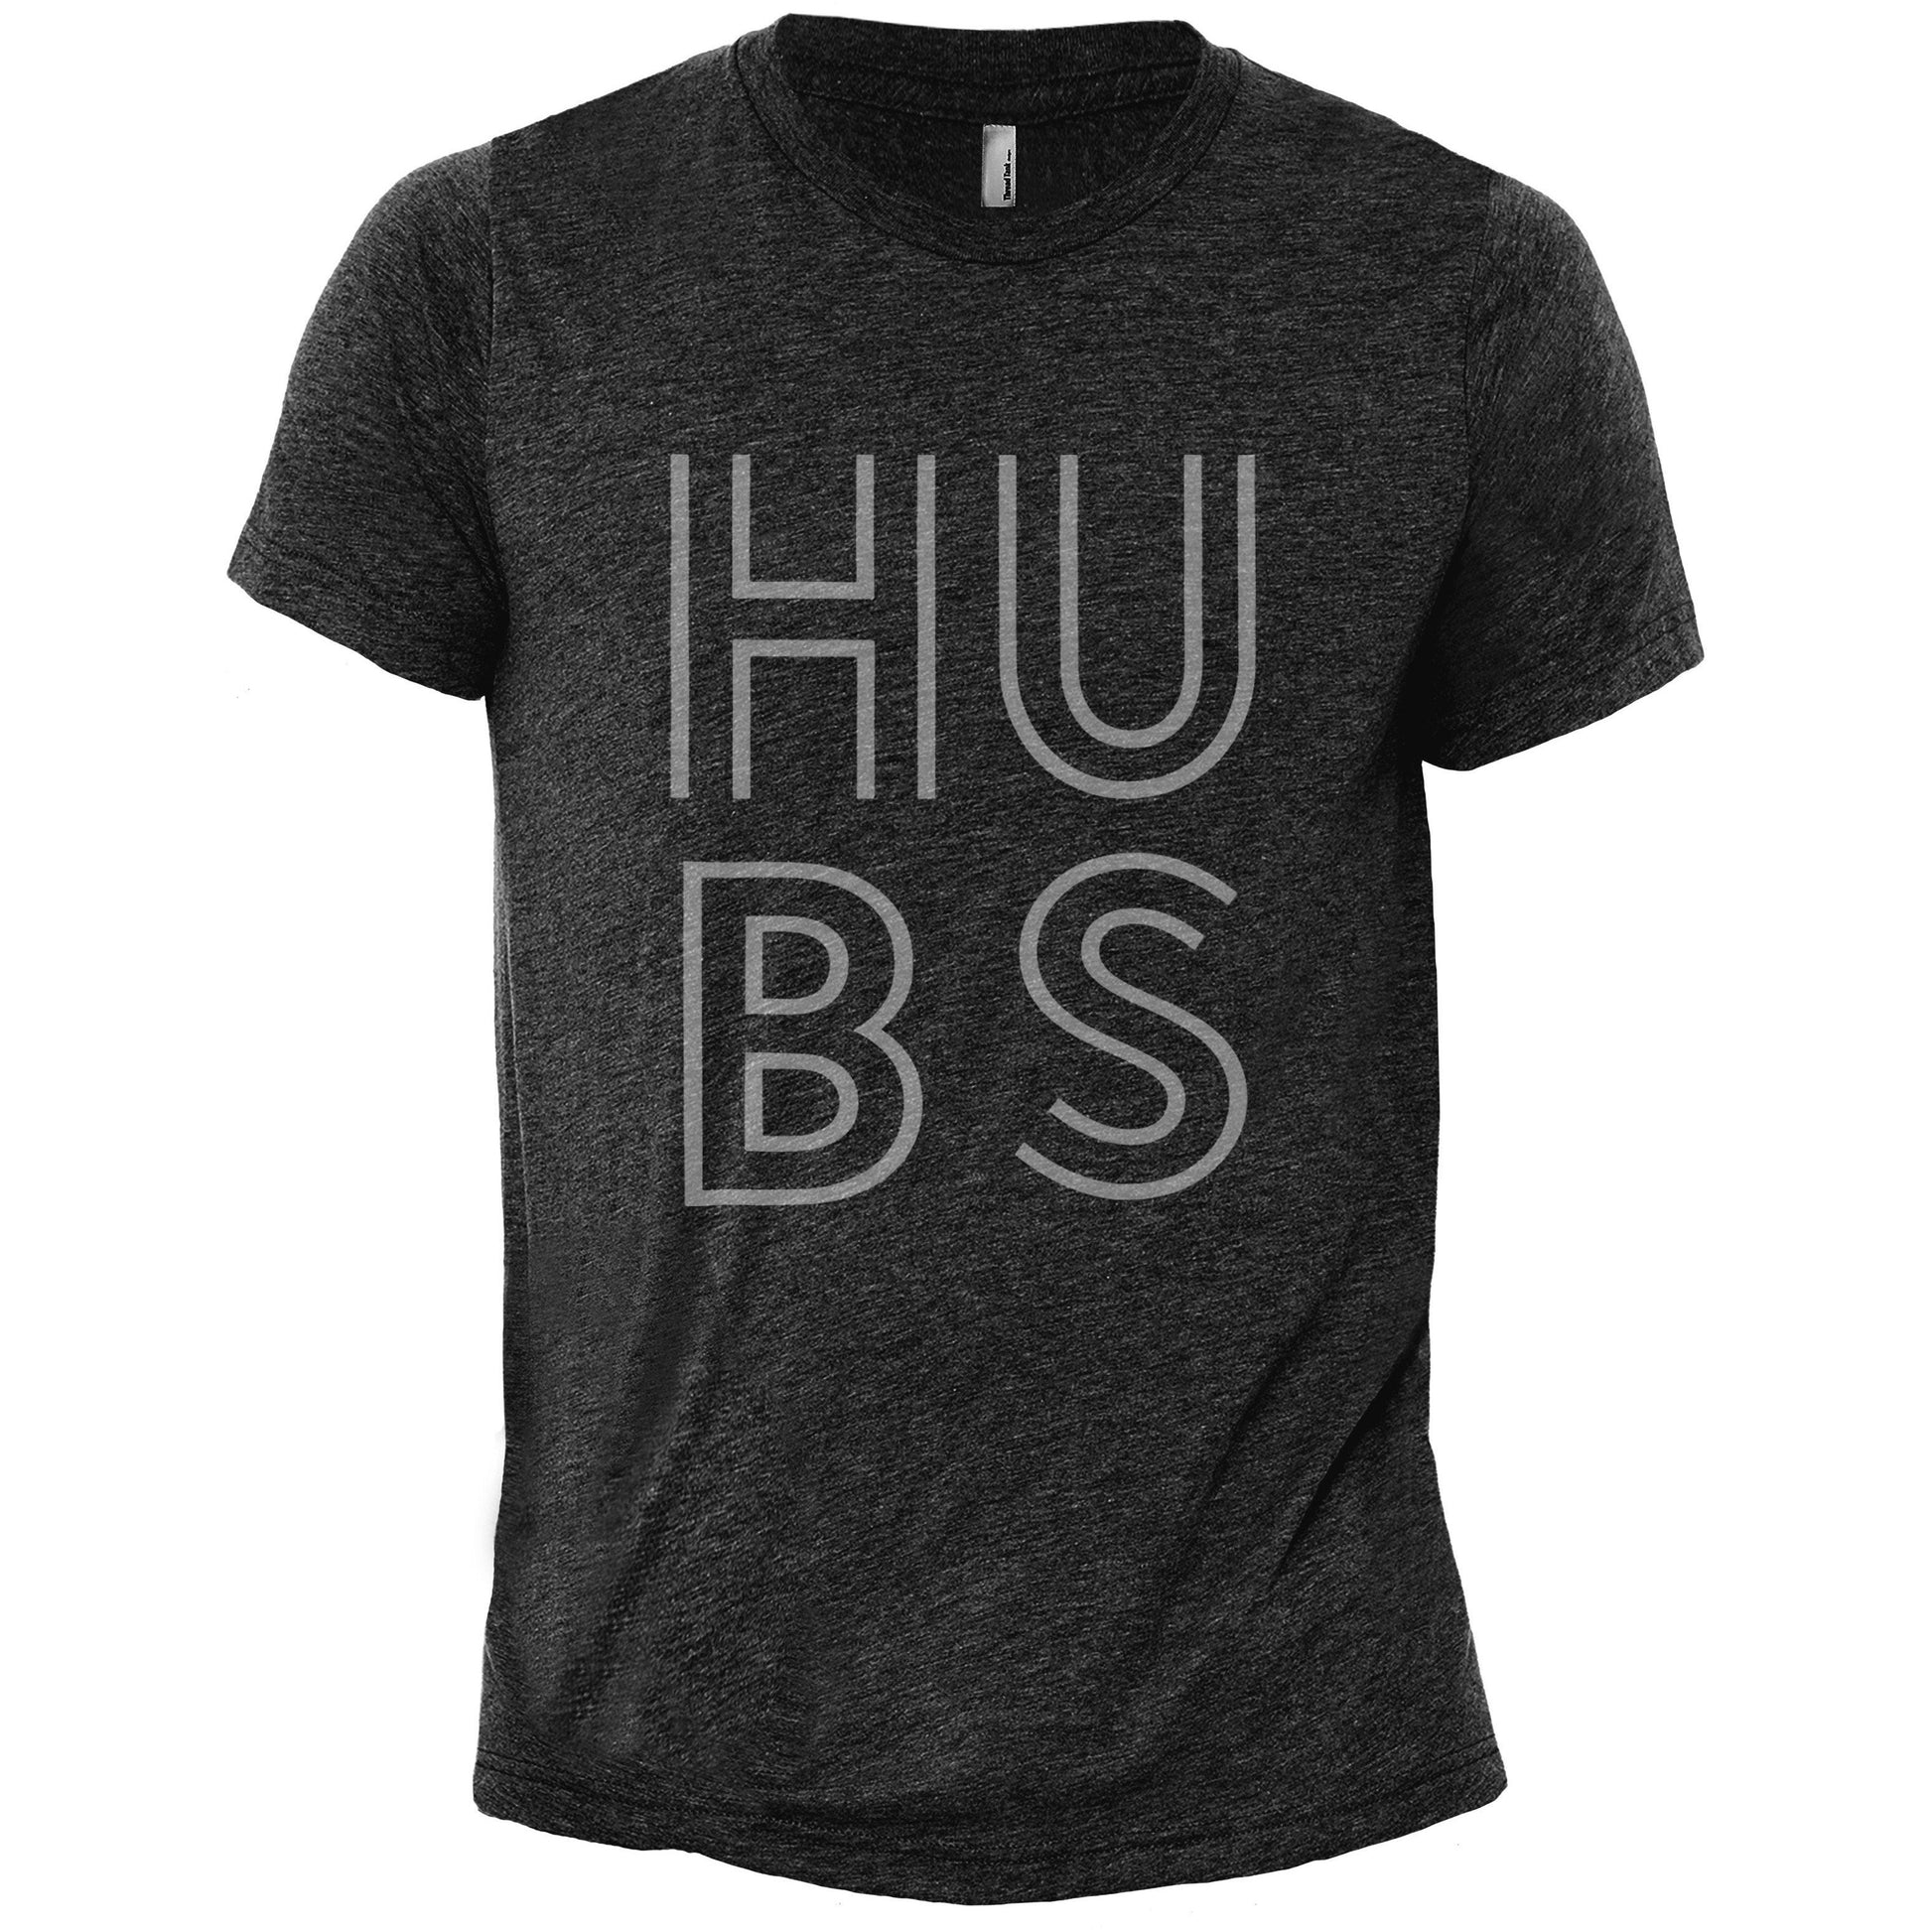 Hubs Minimalistic Design Charcoal Printed Graphic Men's Crew T-Shirt Tee